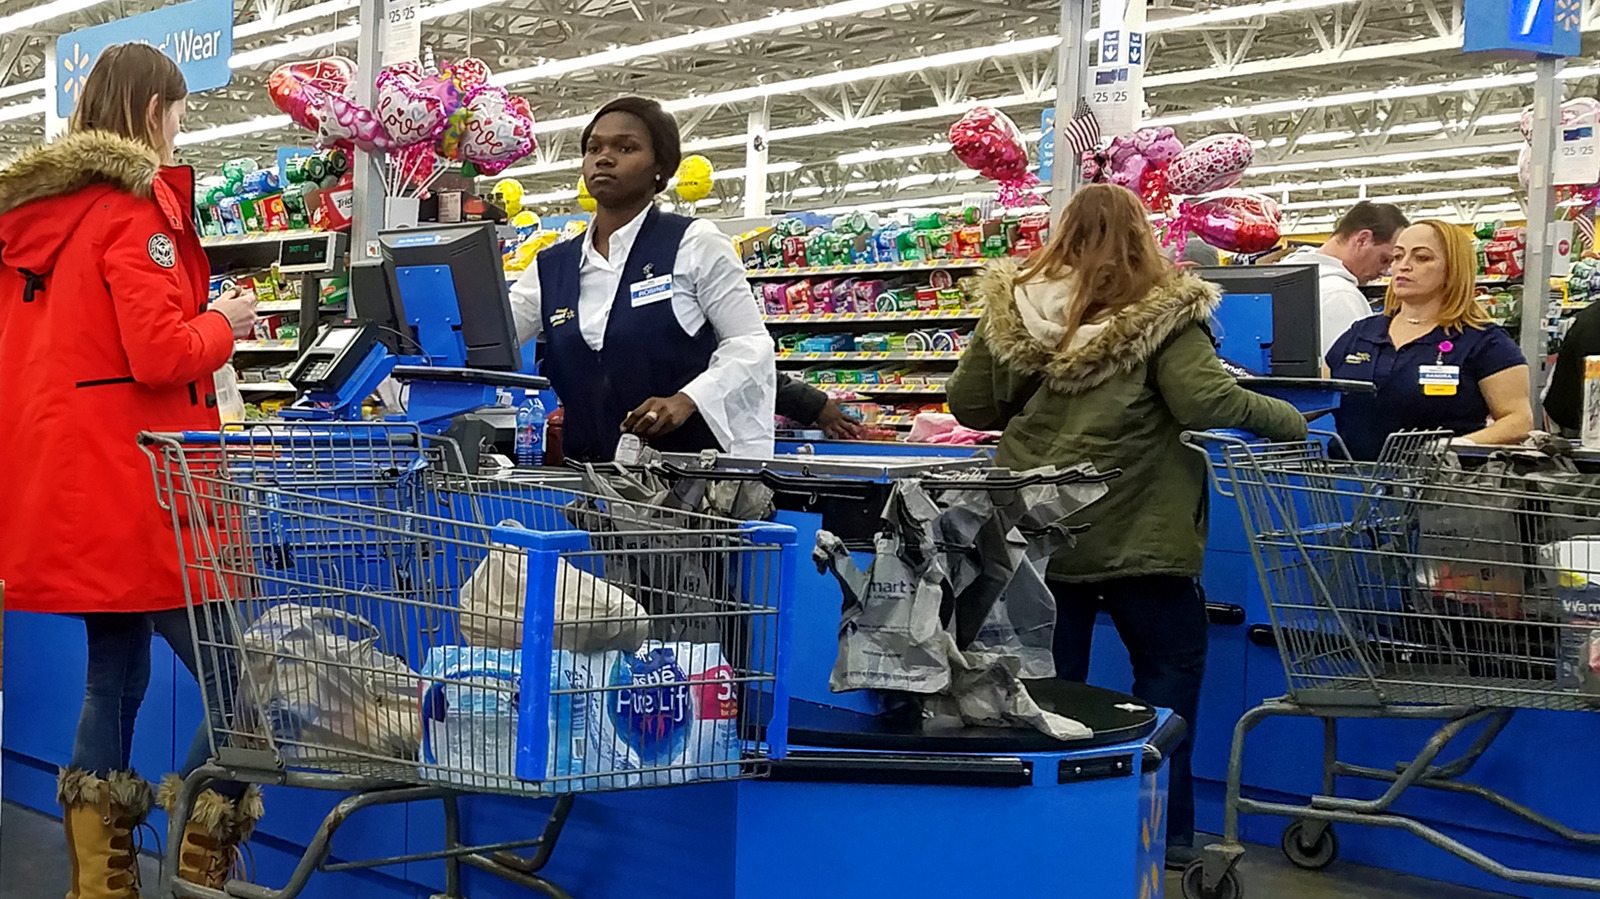 Reddit Is Appalled At This Alleged Walmart Safety Violation